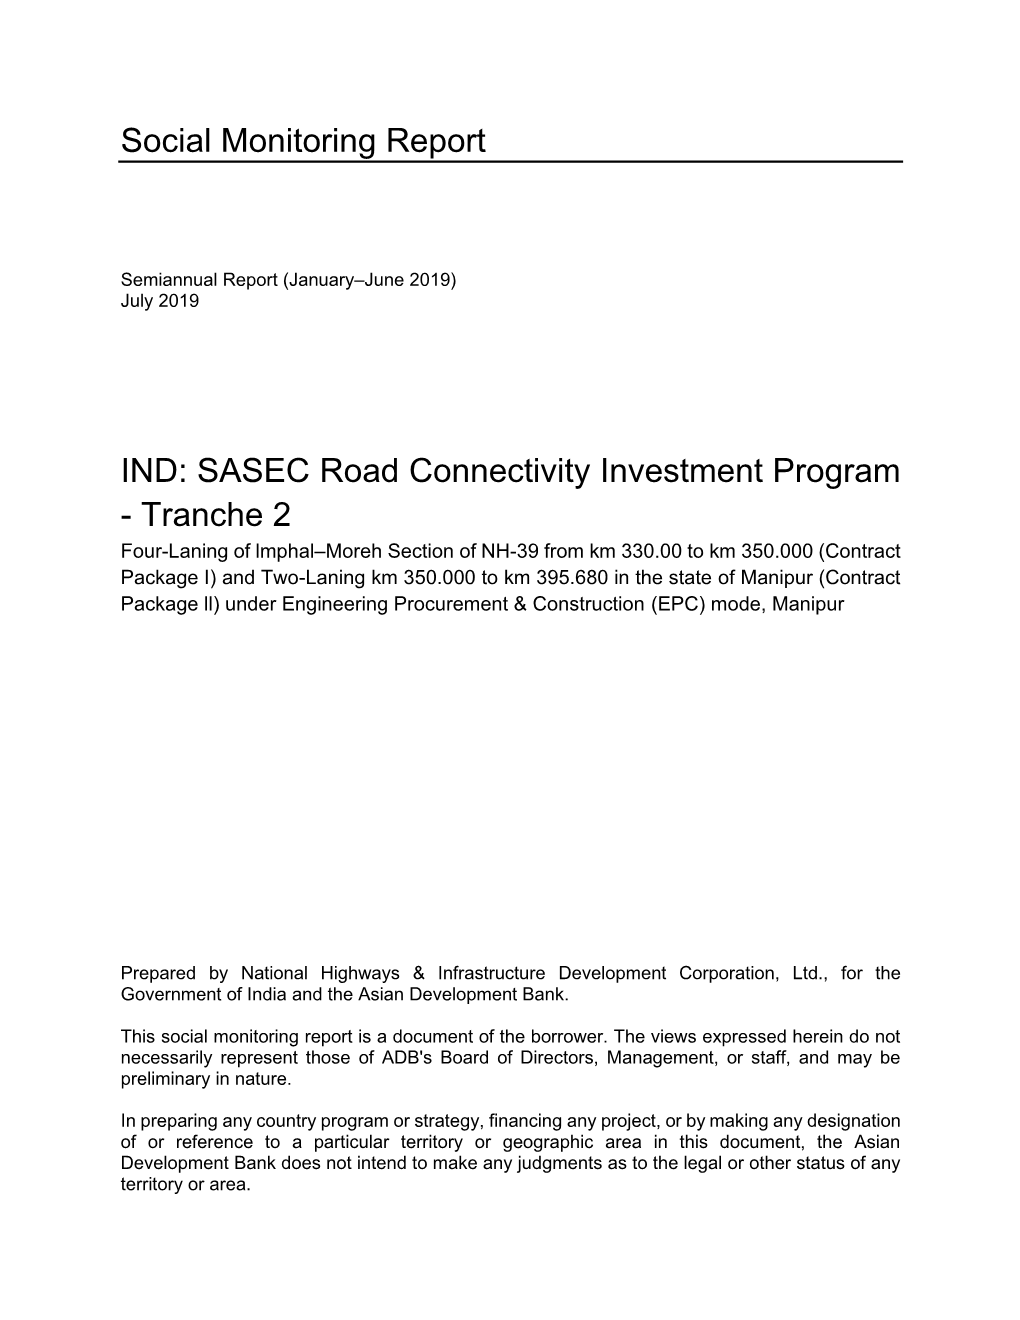 47341-003: SASEC Road Connectivity Investment Program